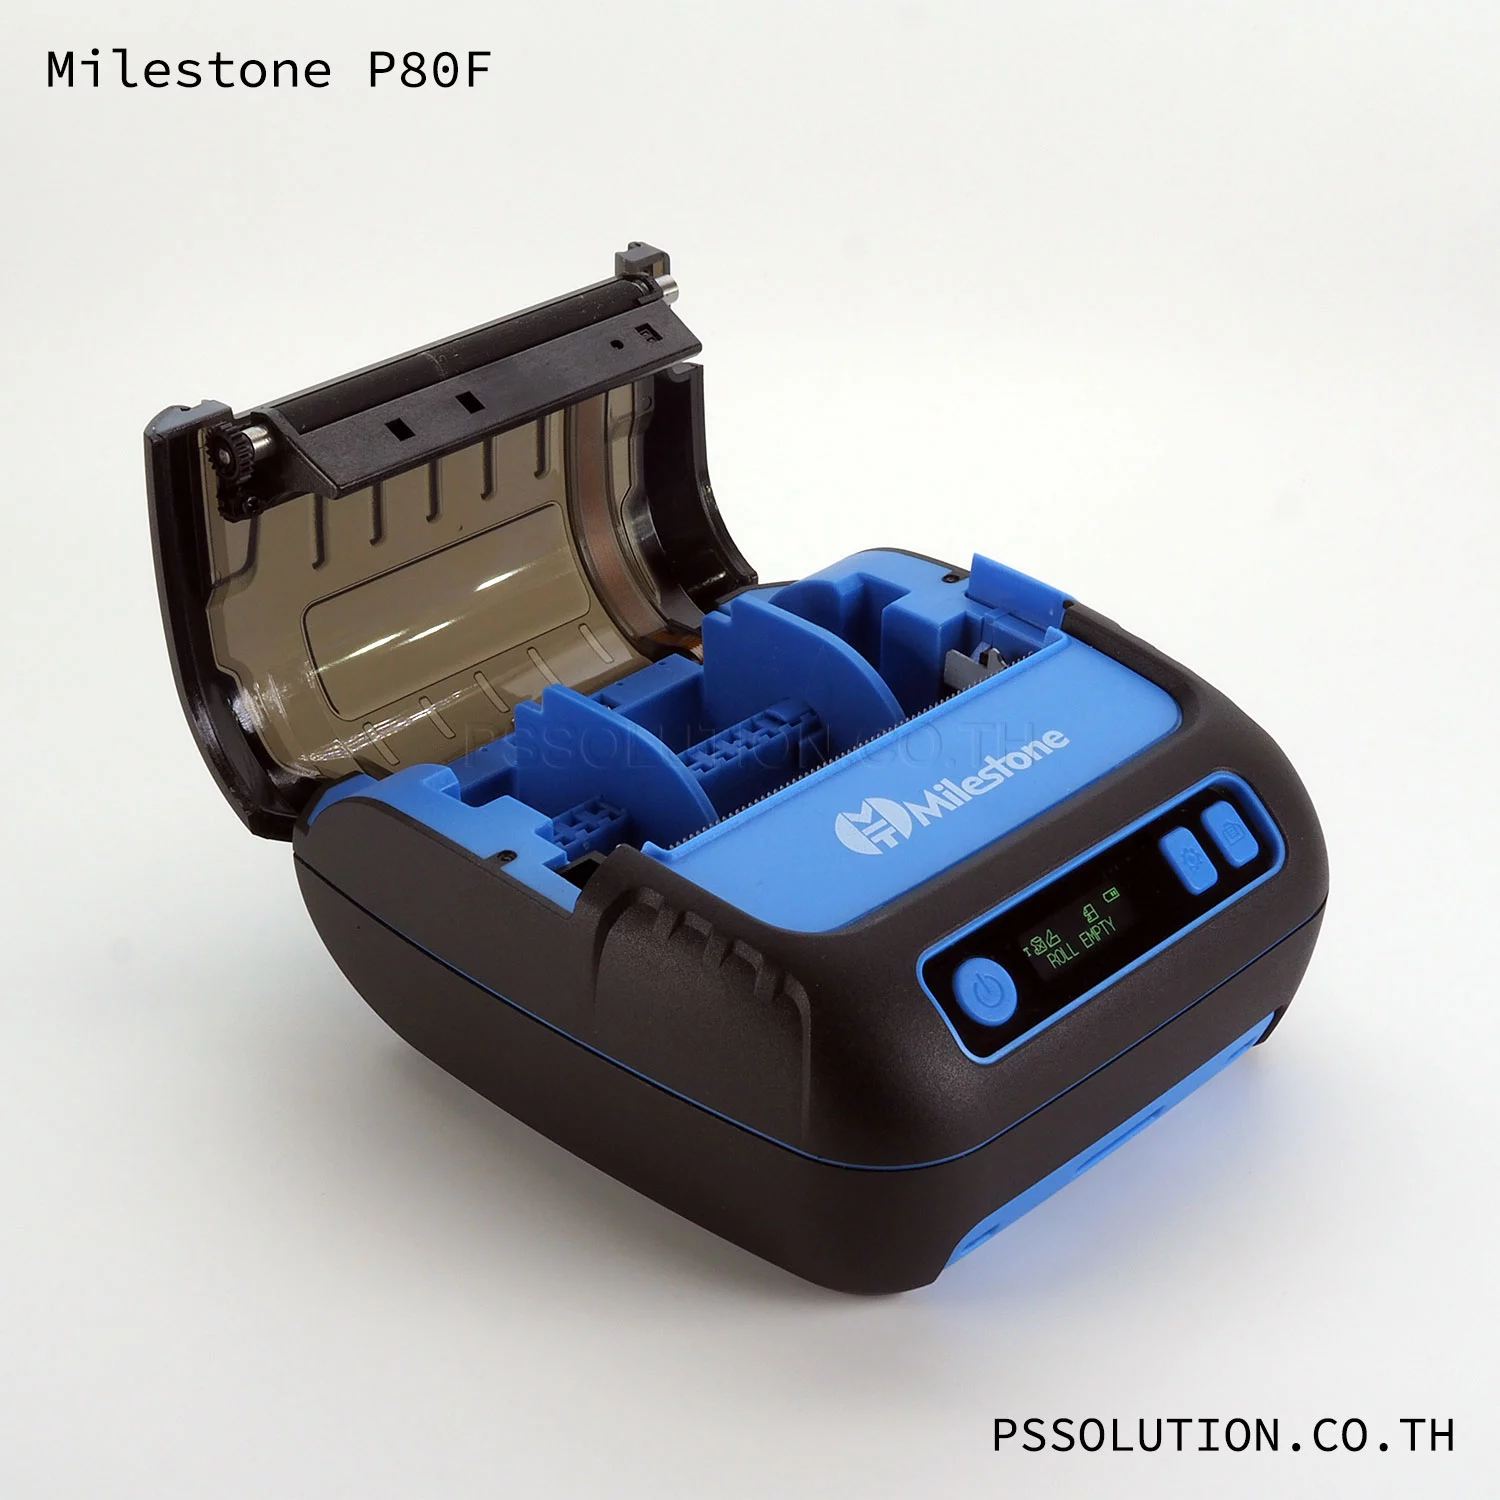 Milestone P80F เครื่องปริ้นใบเสร็จพกพา เครื่องพิมพ์สติกเกอร์พกพา BLUETOOTH พิมพ์จากมือถือ Mobile Printer 80mm-4